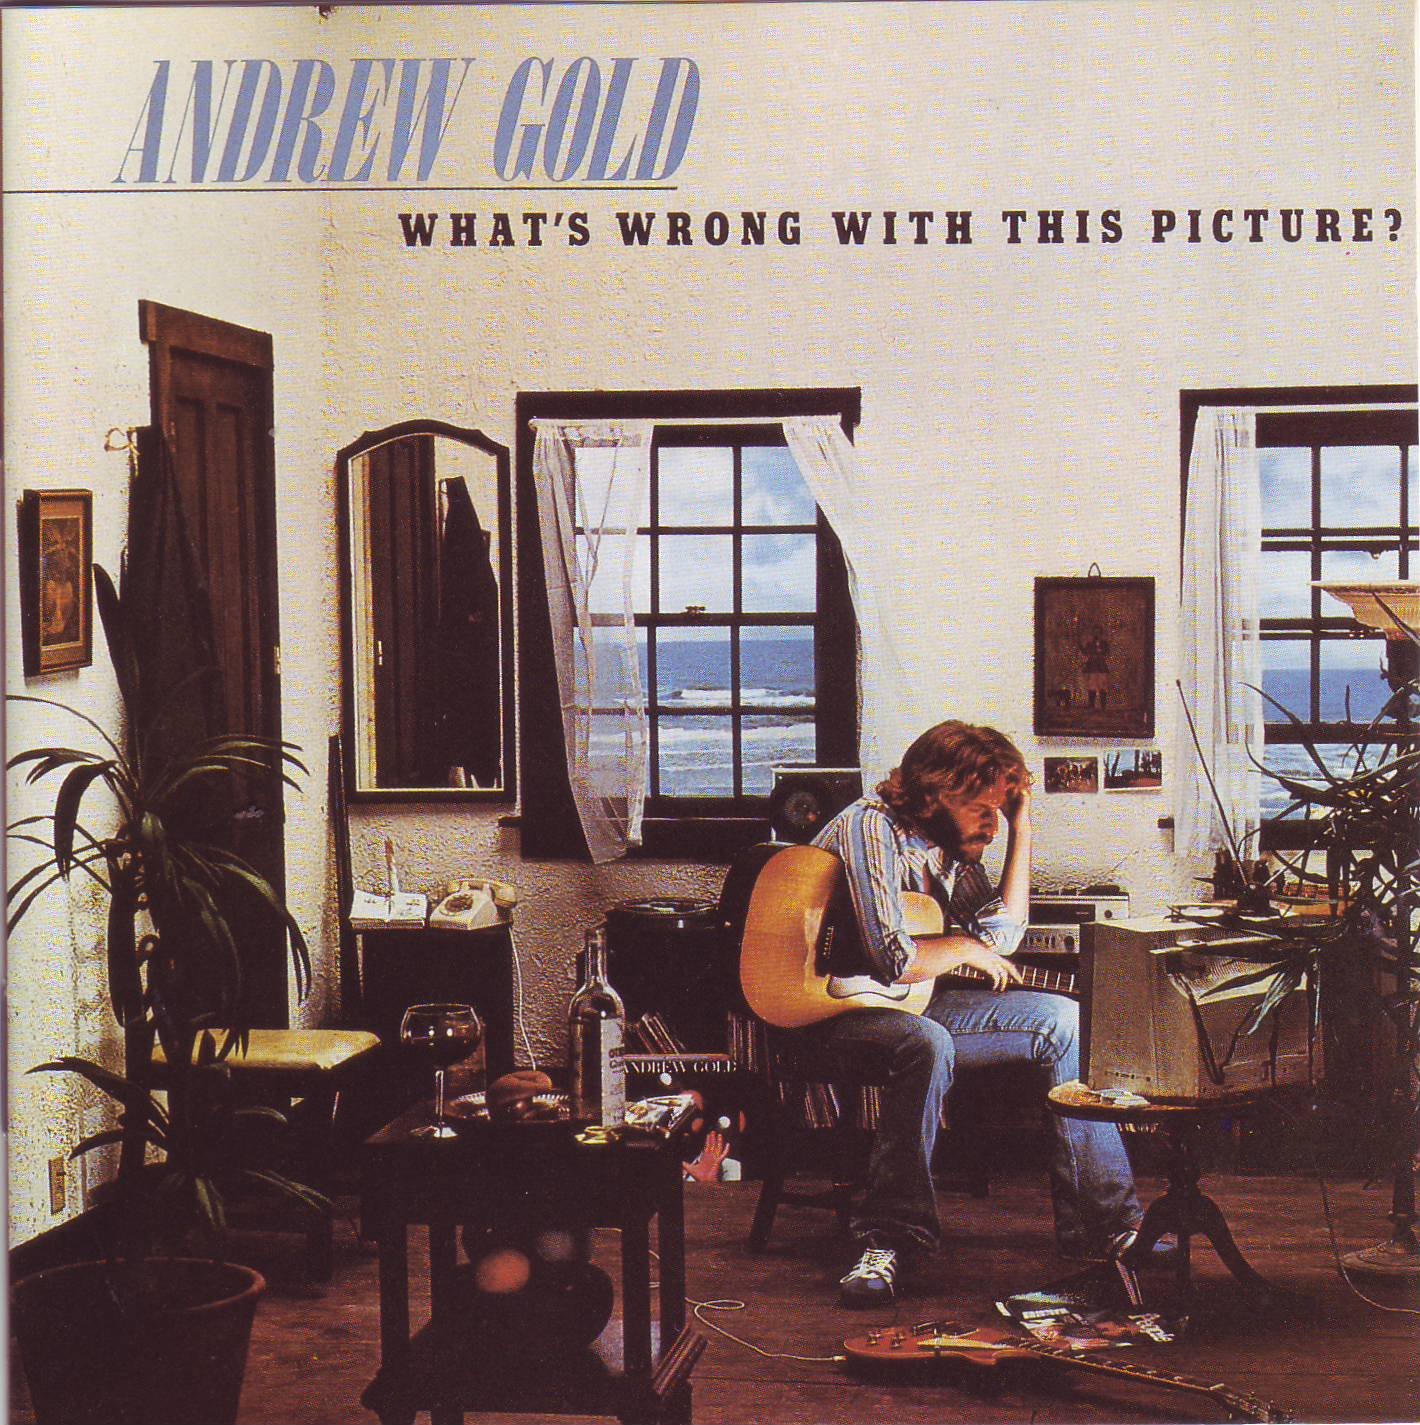 Andrew Gold at Vinyl Record Memories.